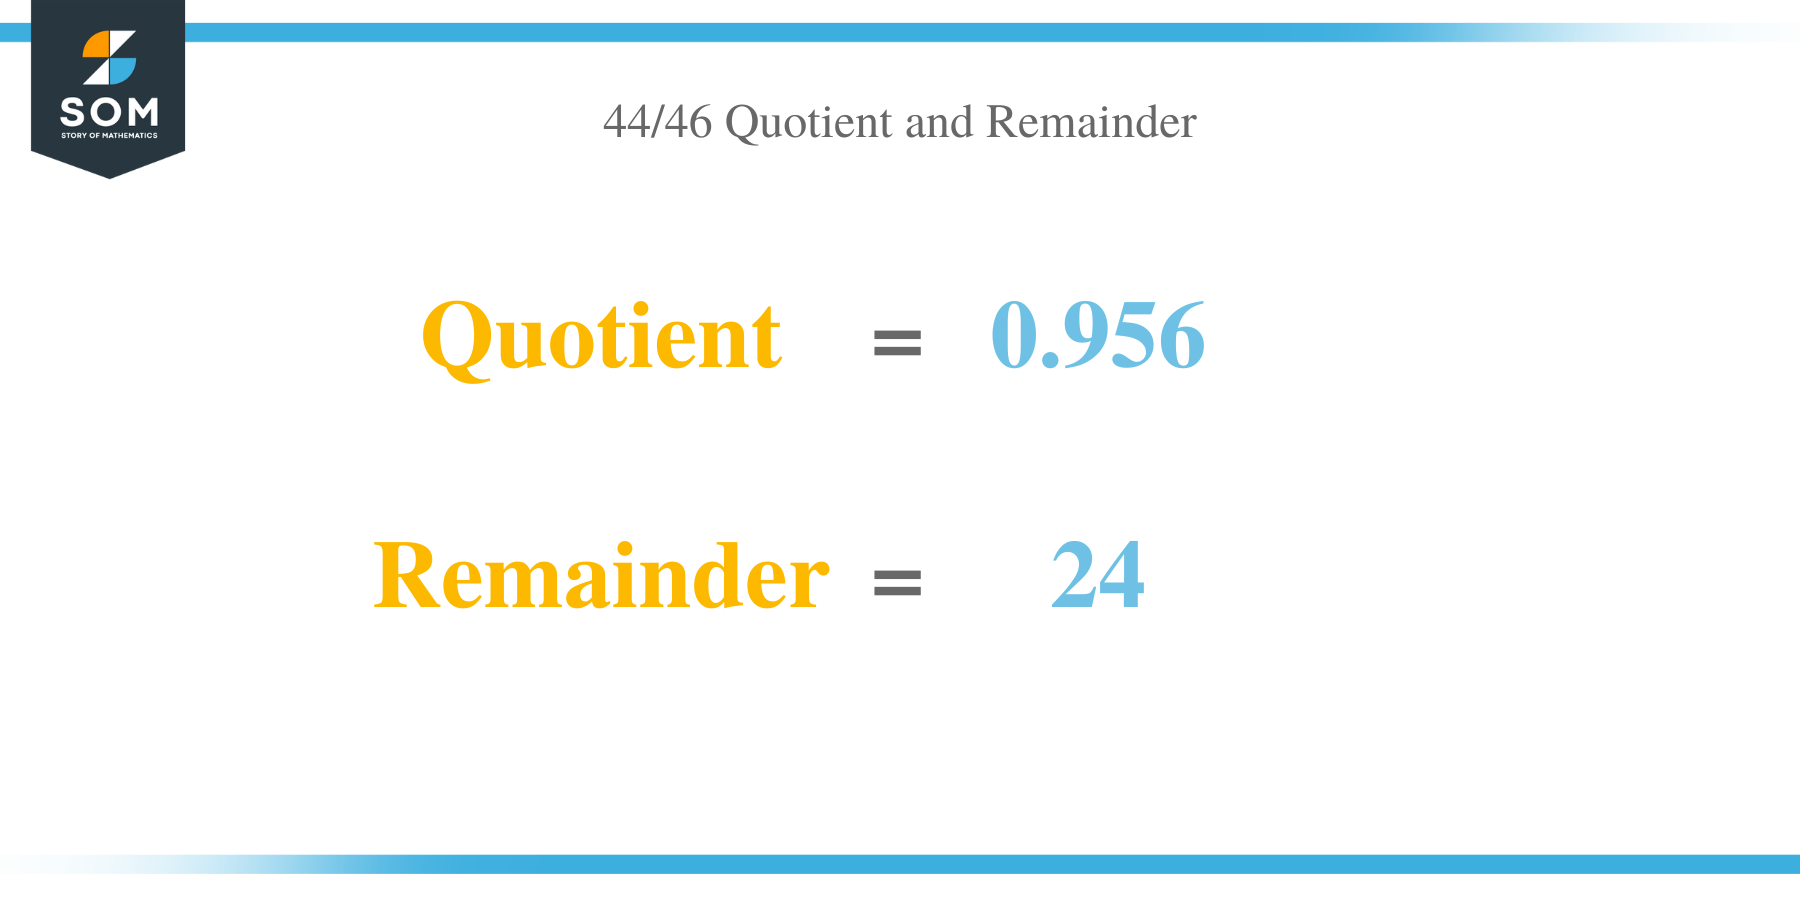 Quotient and Remainder of 44 per 46